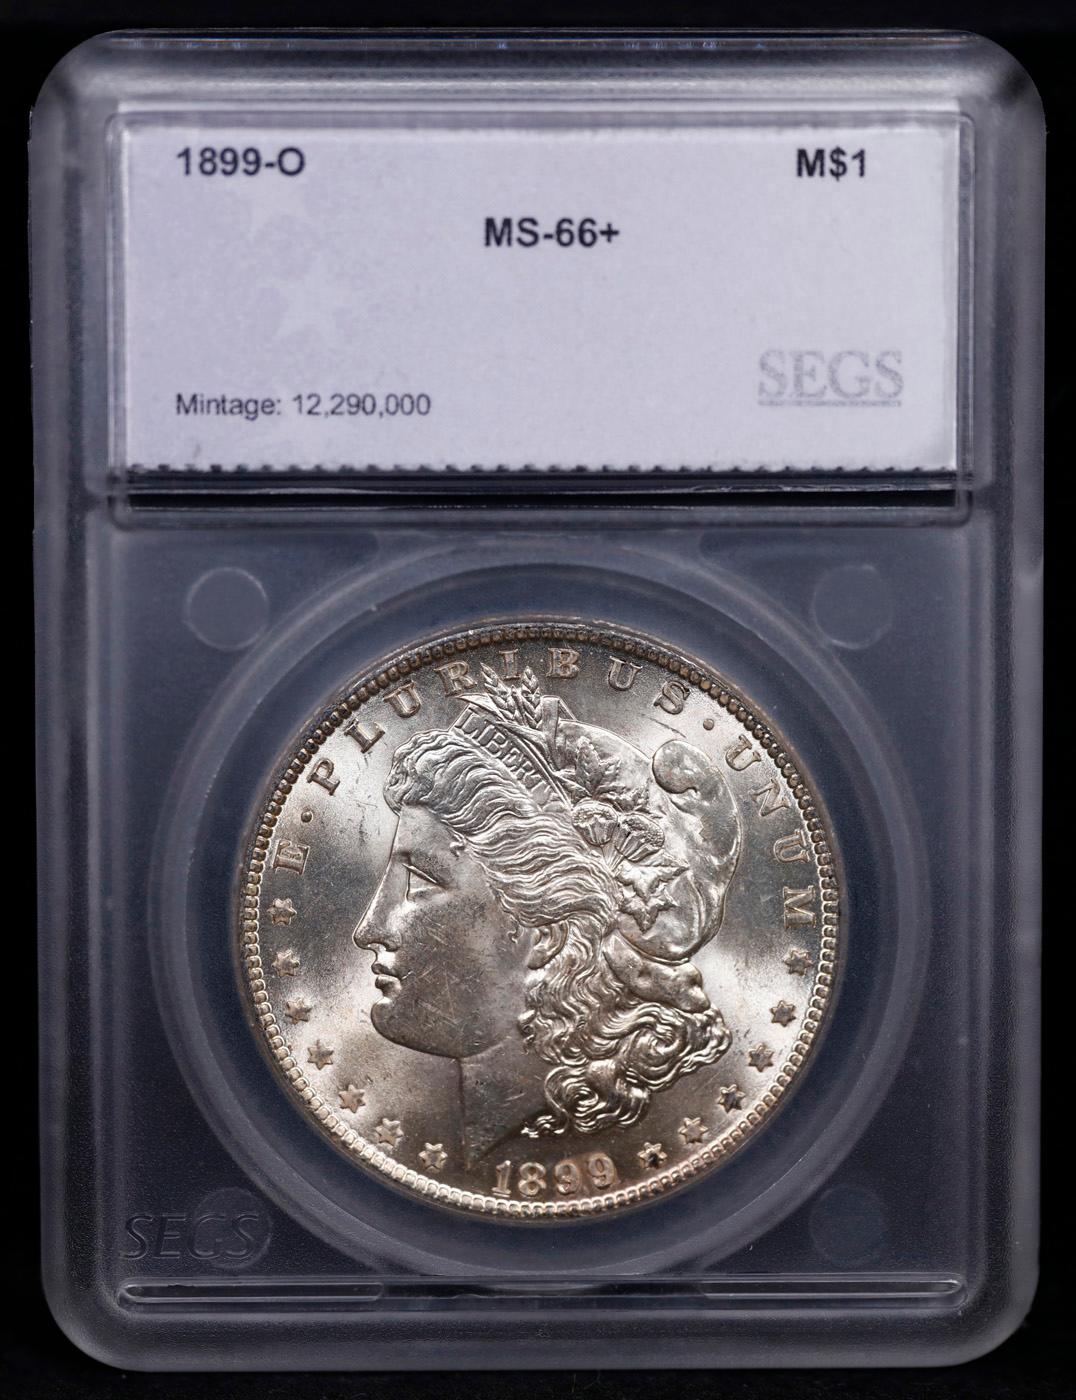 ***Auction Highlight*** 1899-o Morgan Dollar 1 Graded ms66+ BY SEGS (fc)